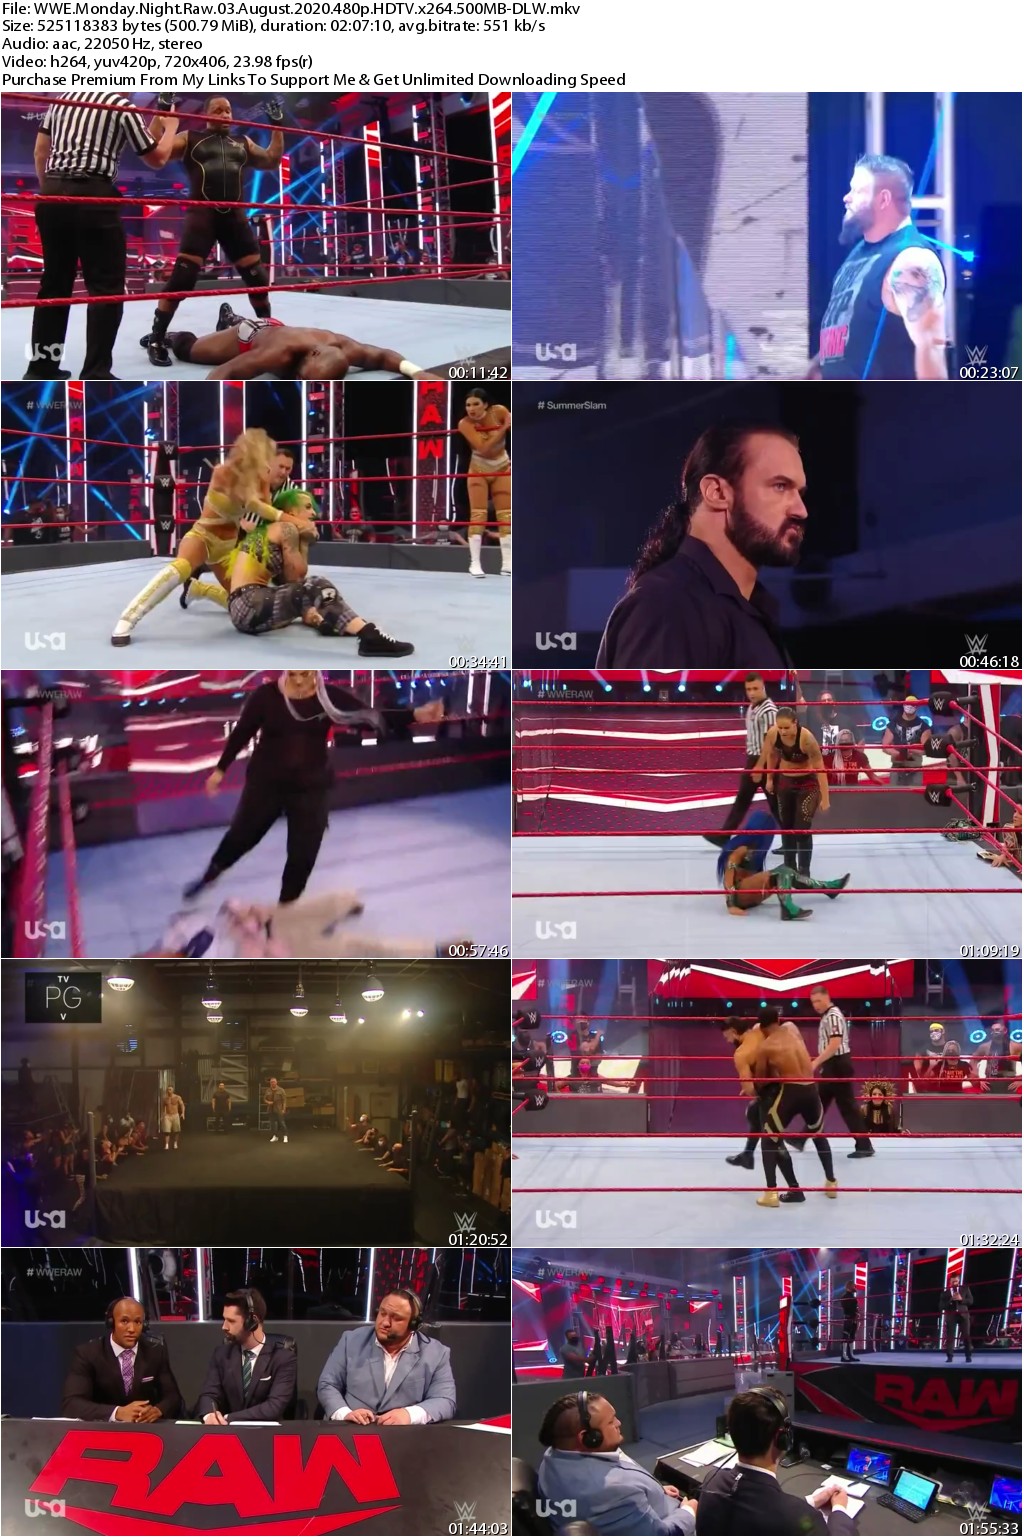 WWE Monday Night Raw 03 August 2020 480p HDTV x264 500MB-DLW